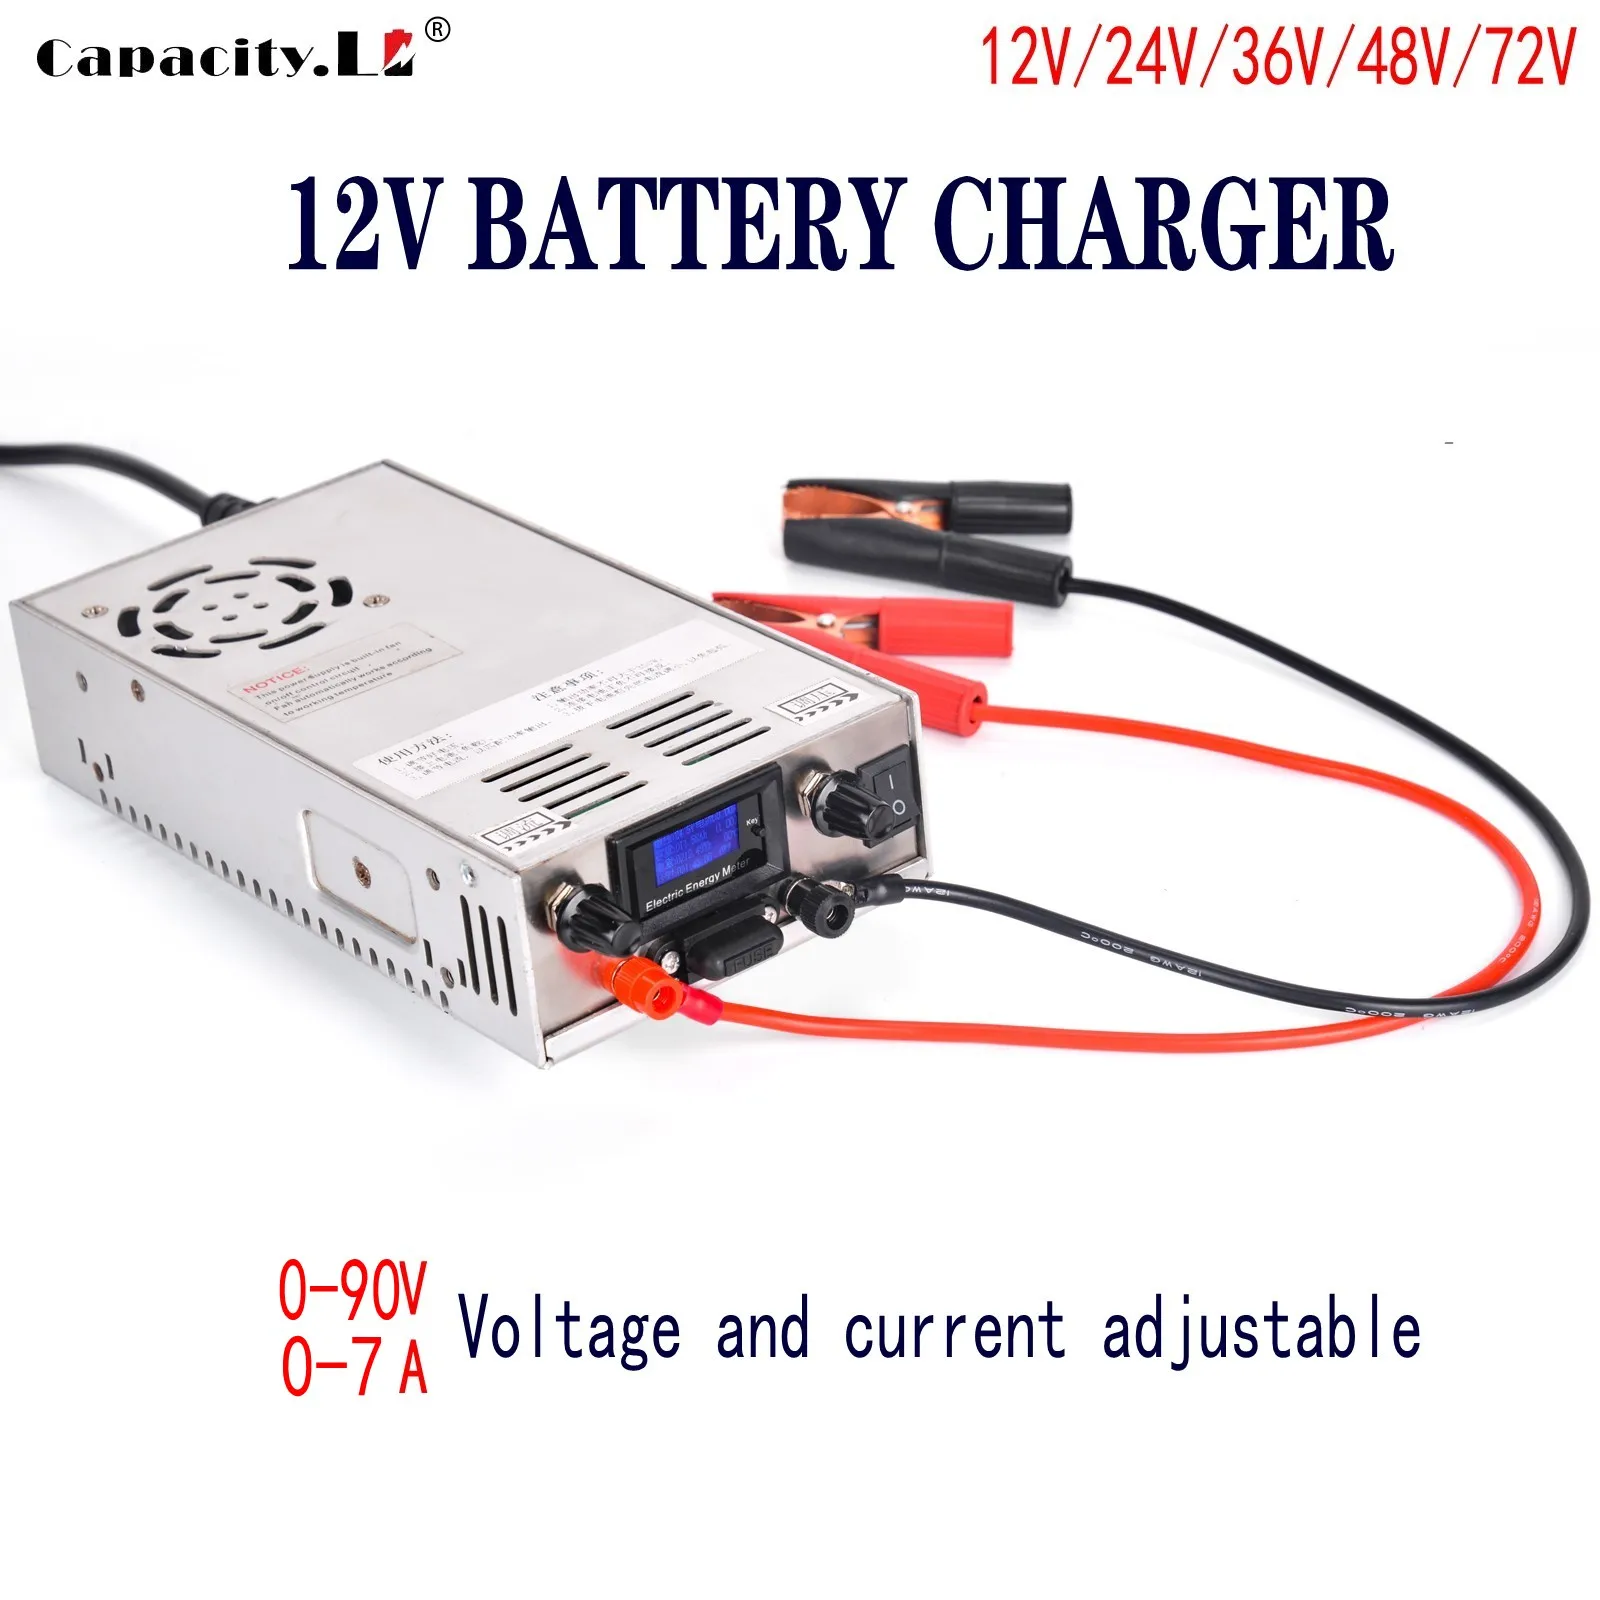 

36V 48V 72V 24v Lifepo4 Charger 12V 60A Fast charger Lithium Battery Charger Adapter bicycle charg 14.6V Adjustable current 85A